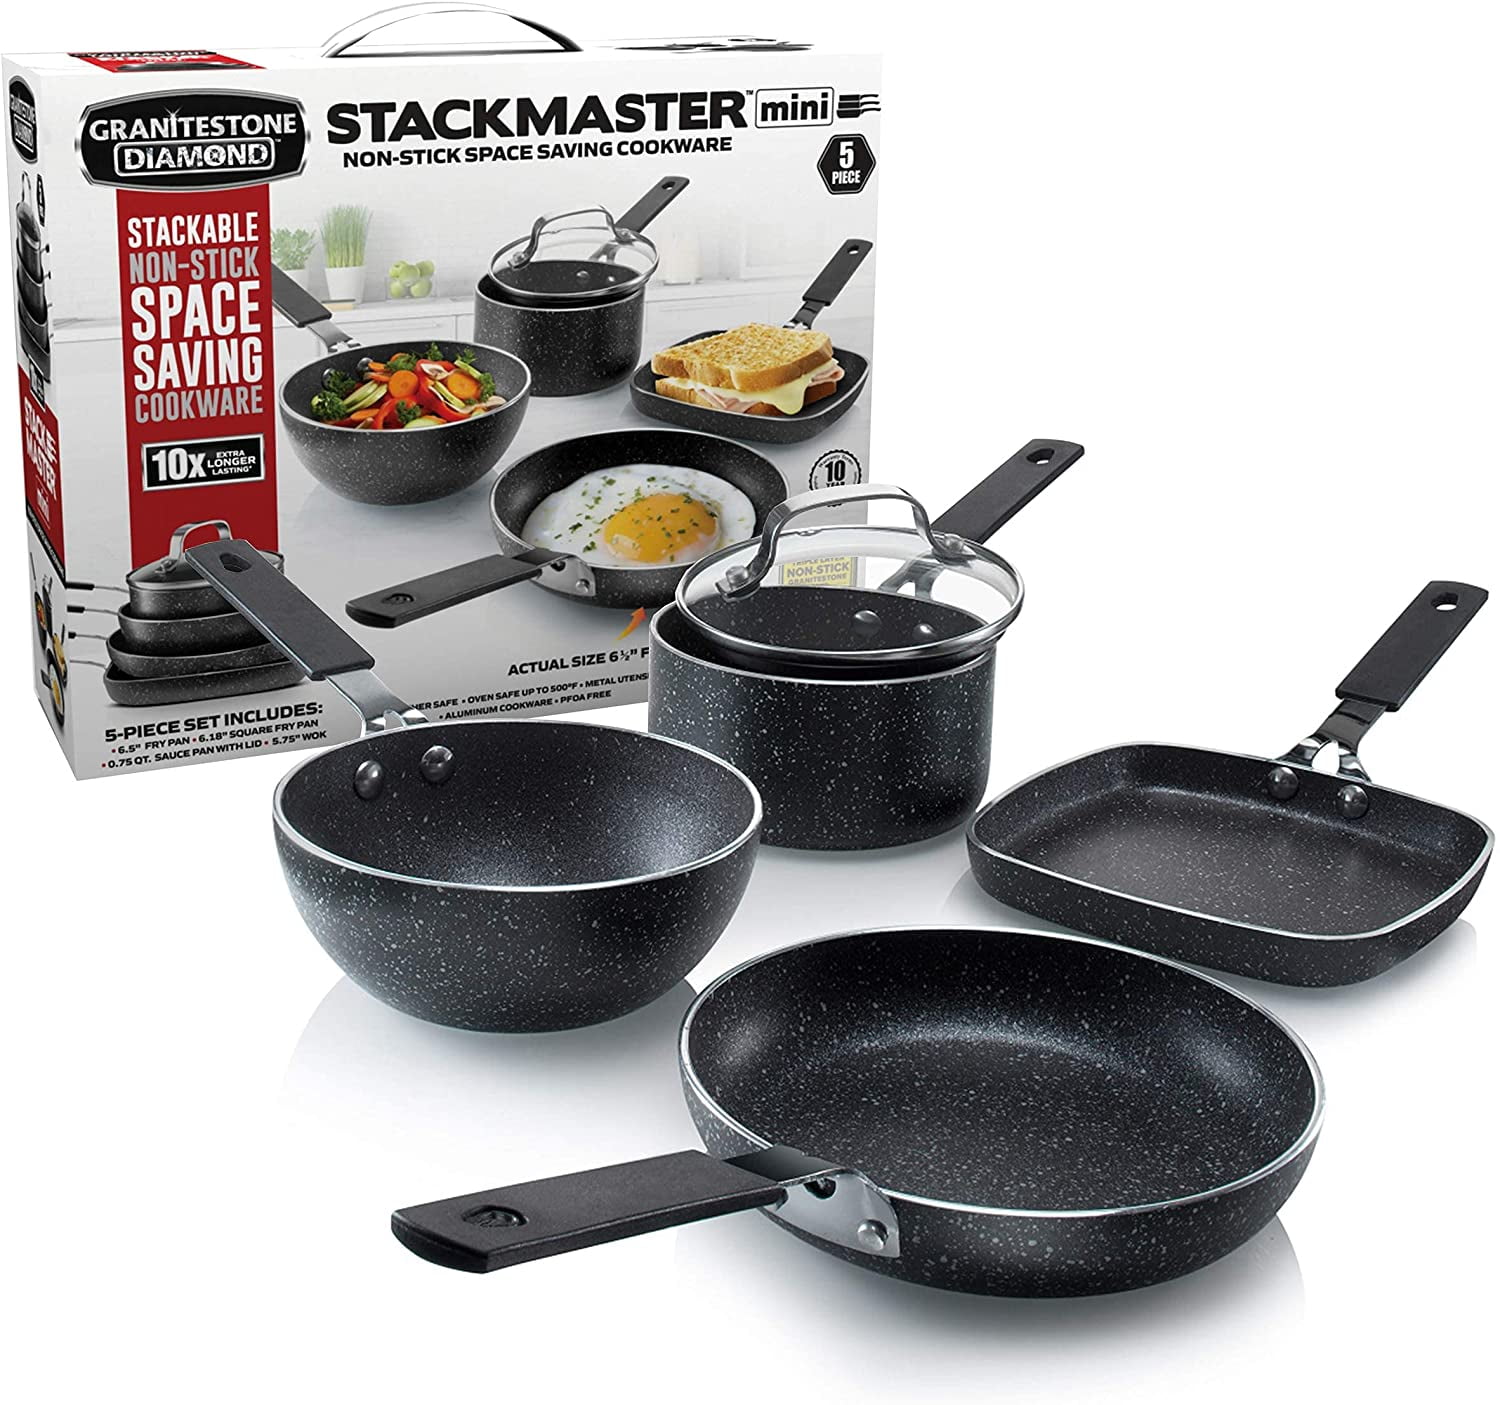  Granitestone Original Stackmaster 15 Piece Nonstick Cookware  Set, Scratch Resistant Kitchenware, Pots and Pans, Induction-Compatible:  Home & Kitchen